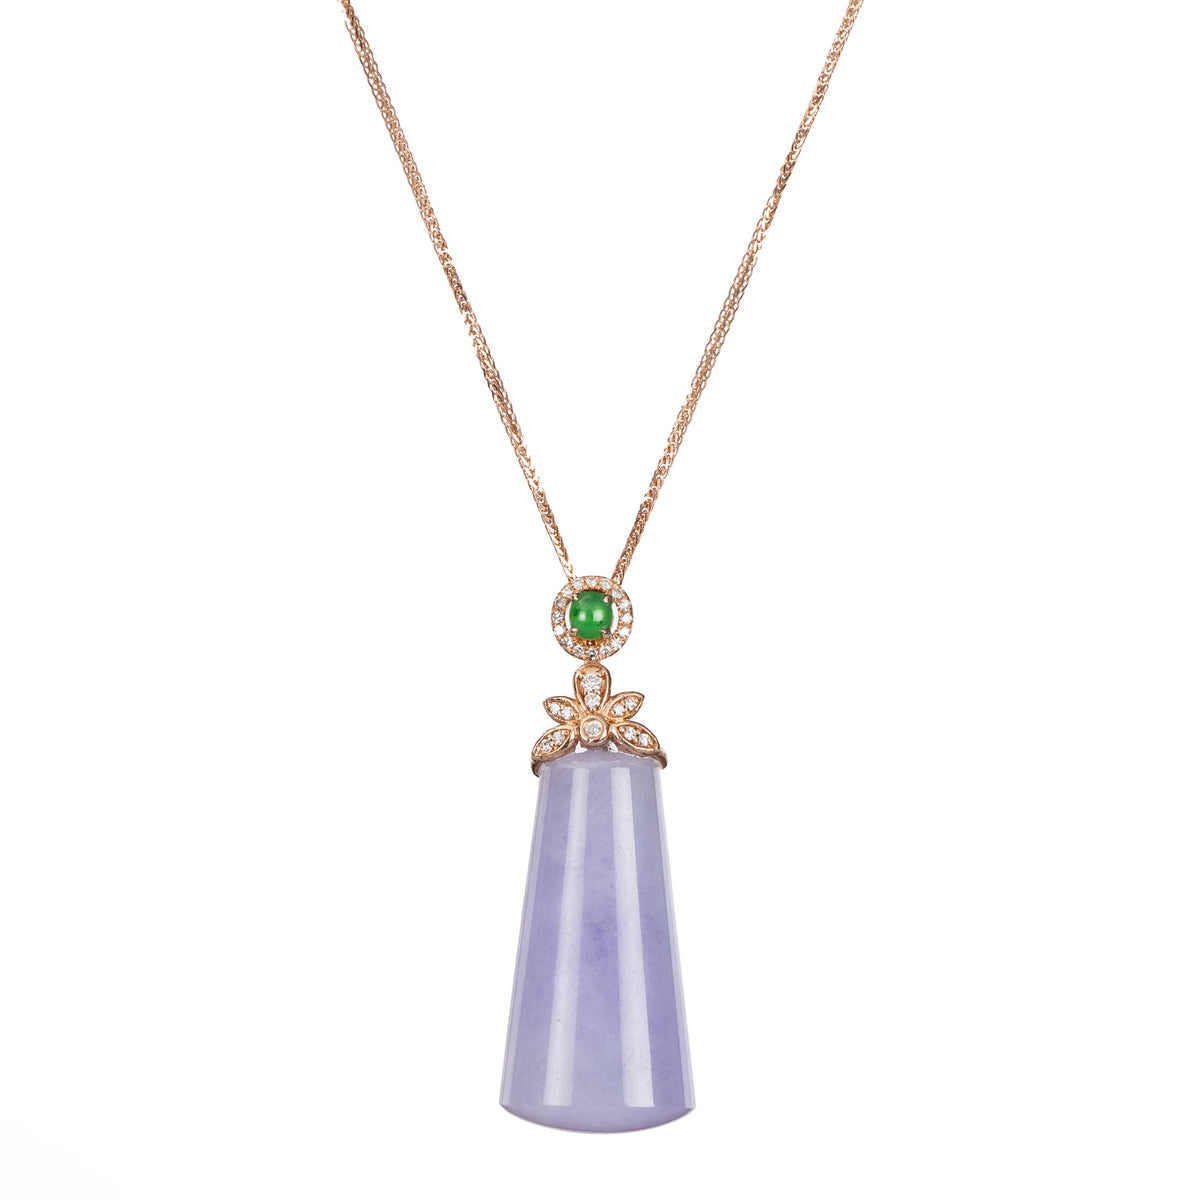 Grade A Lavender Jade Pendant in 18K Rose Gold with Imperial Jade & Diamonds (WuShiPai)